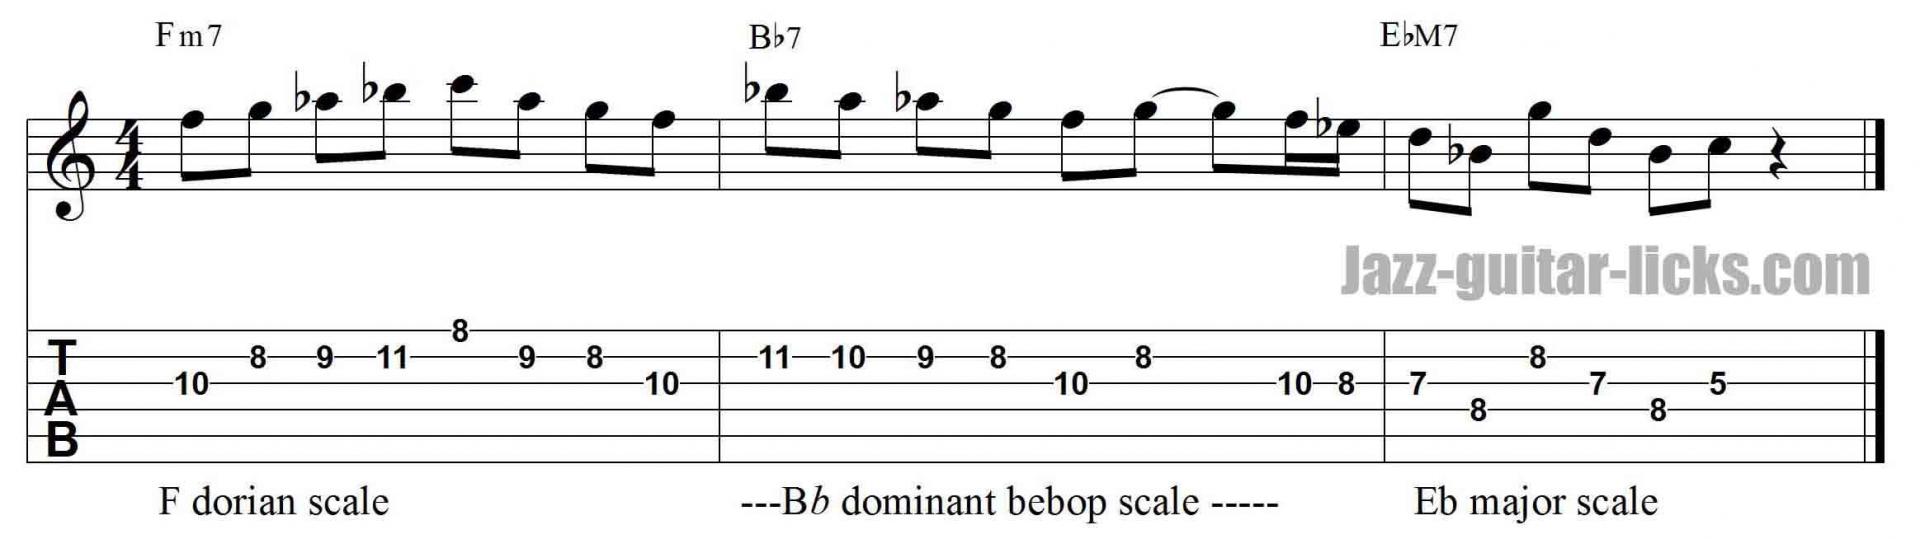 bebop licks guitar pdf torrent